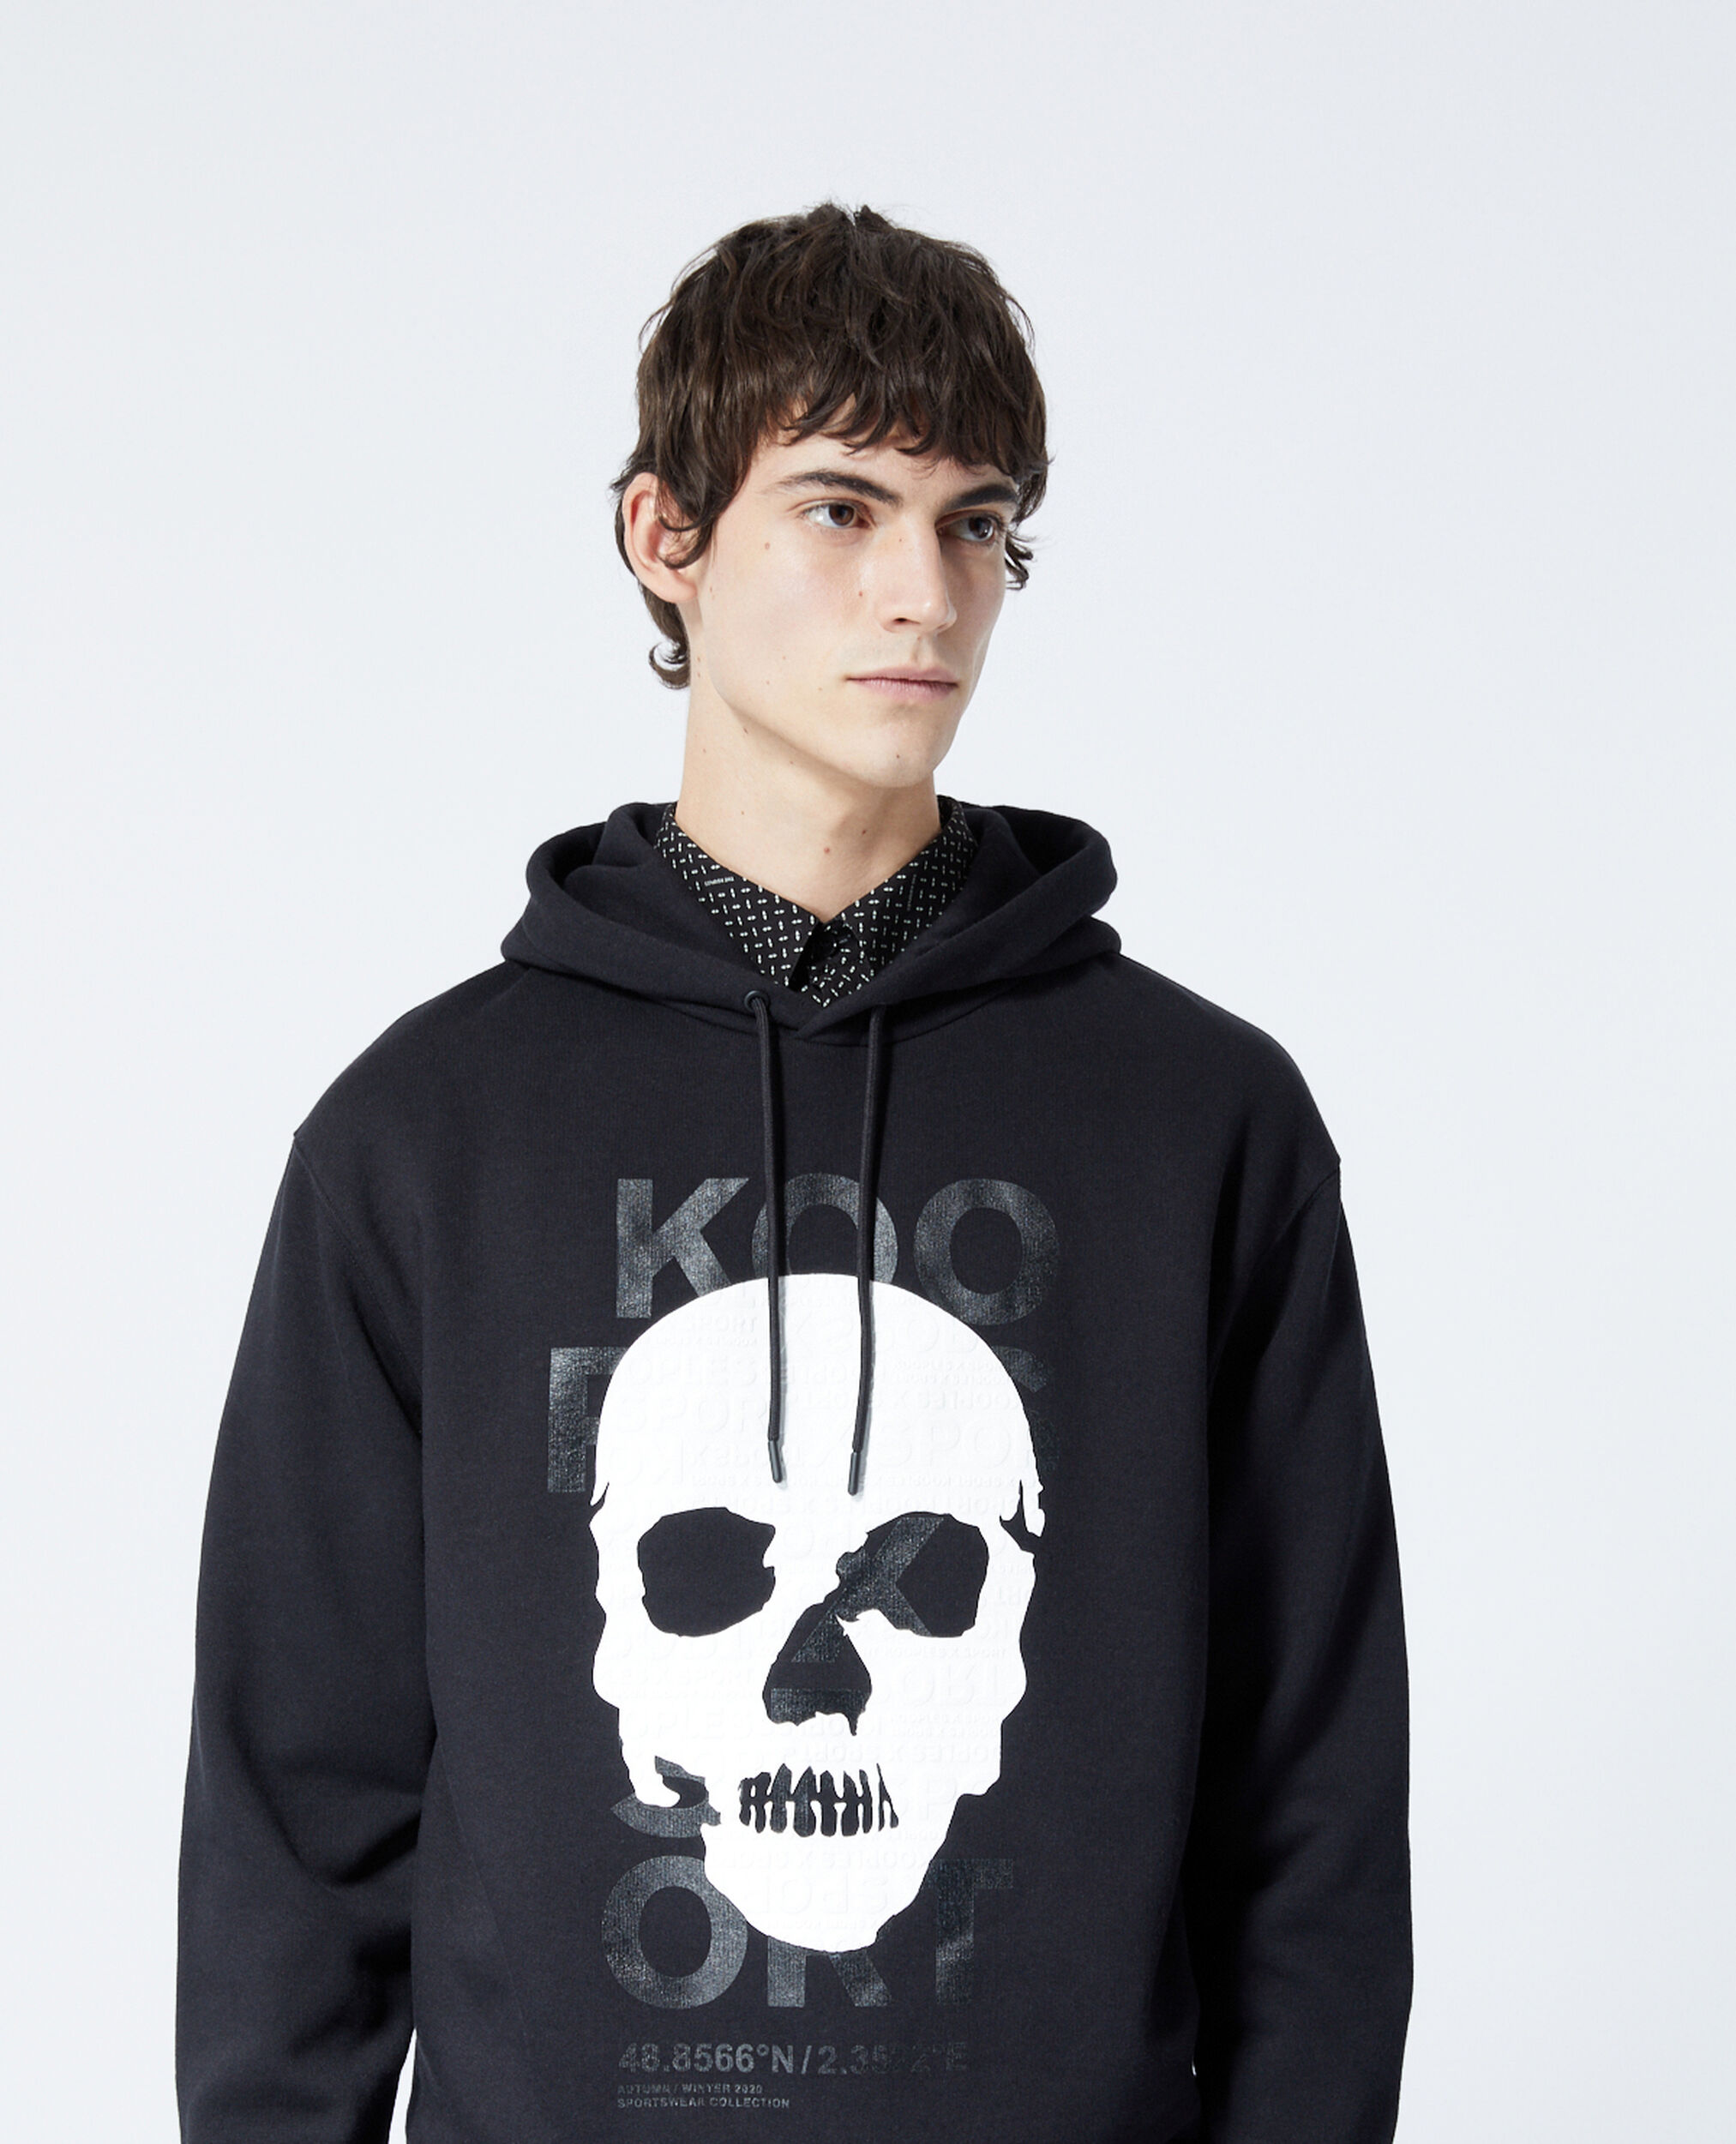 Black sweatshirt with motif hood and | Kooples skull The